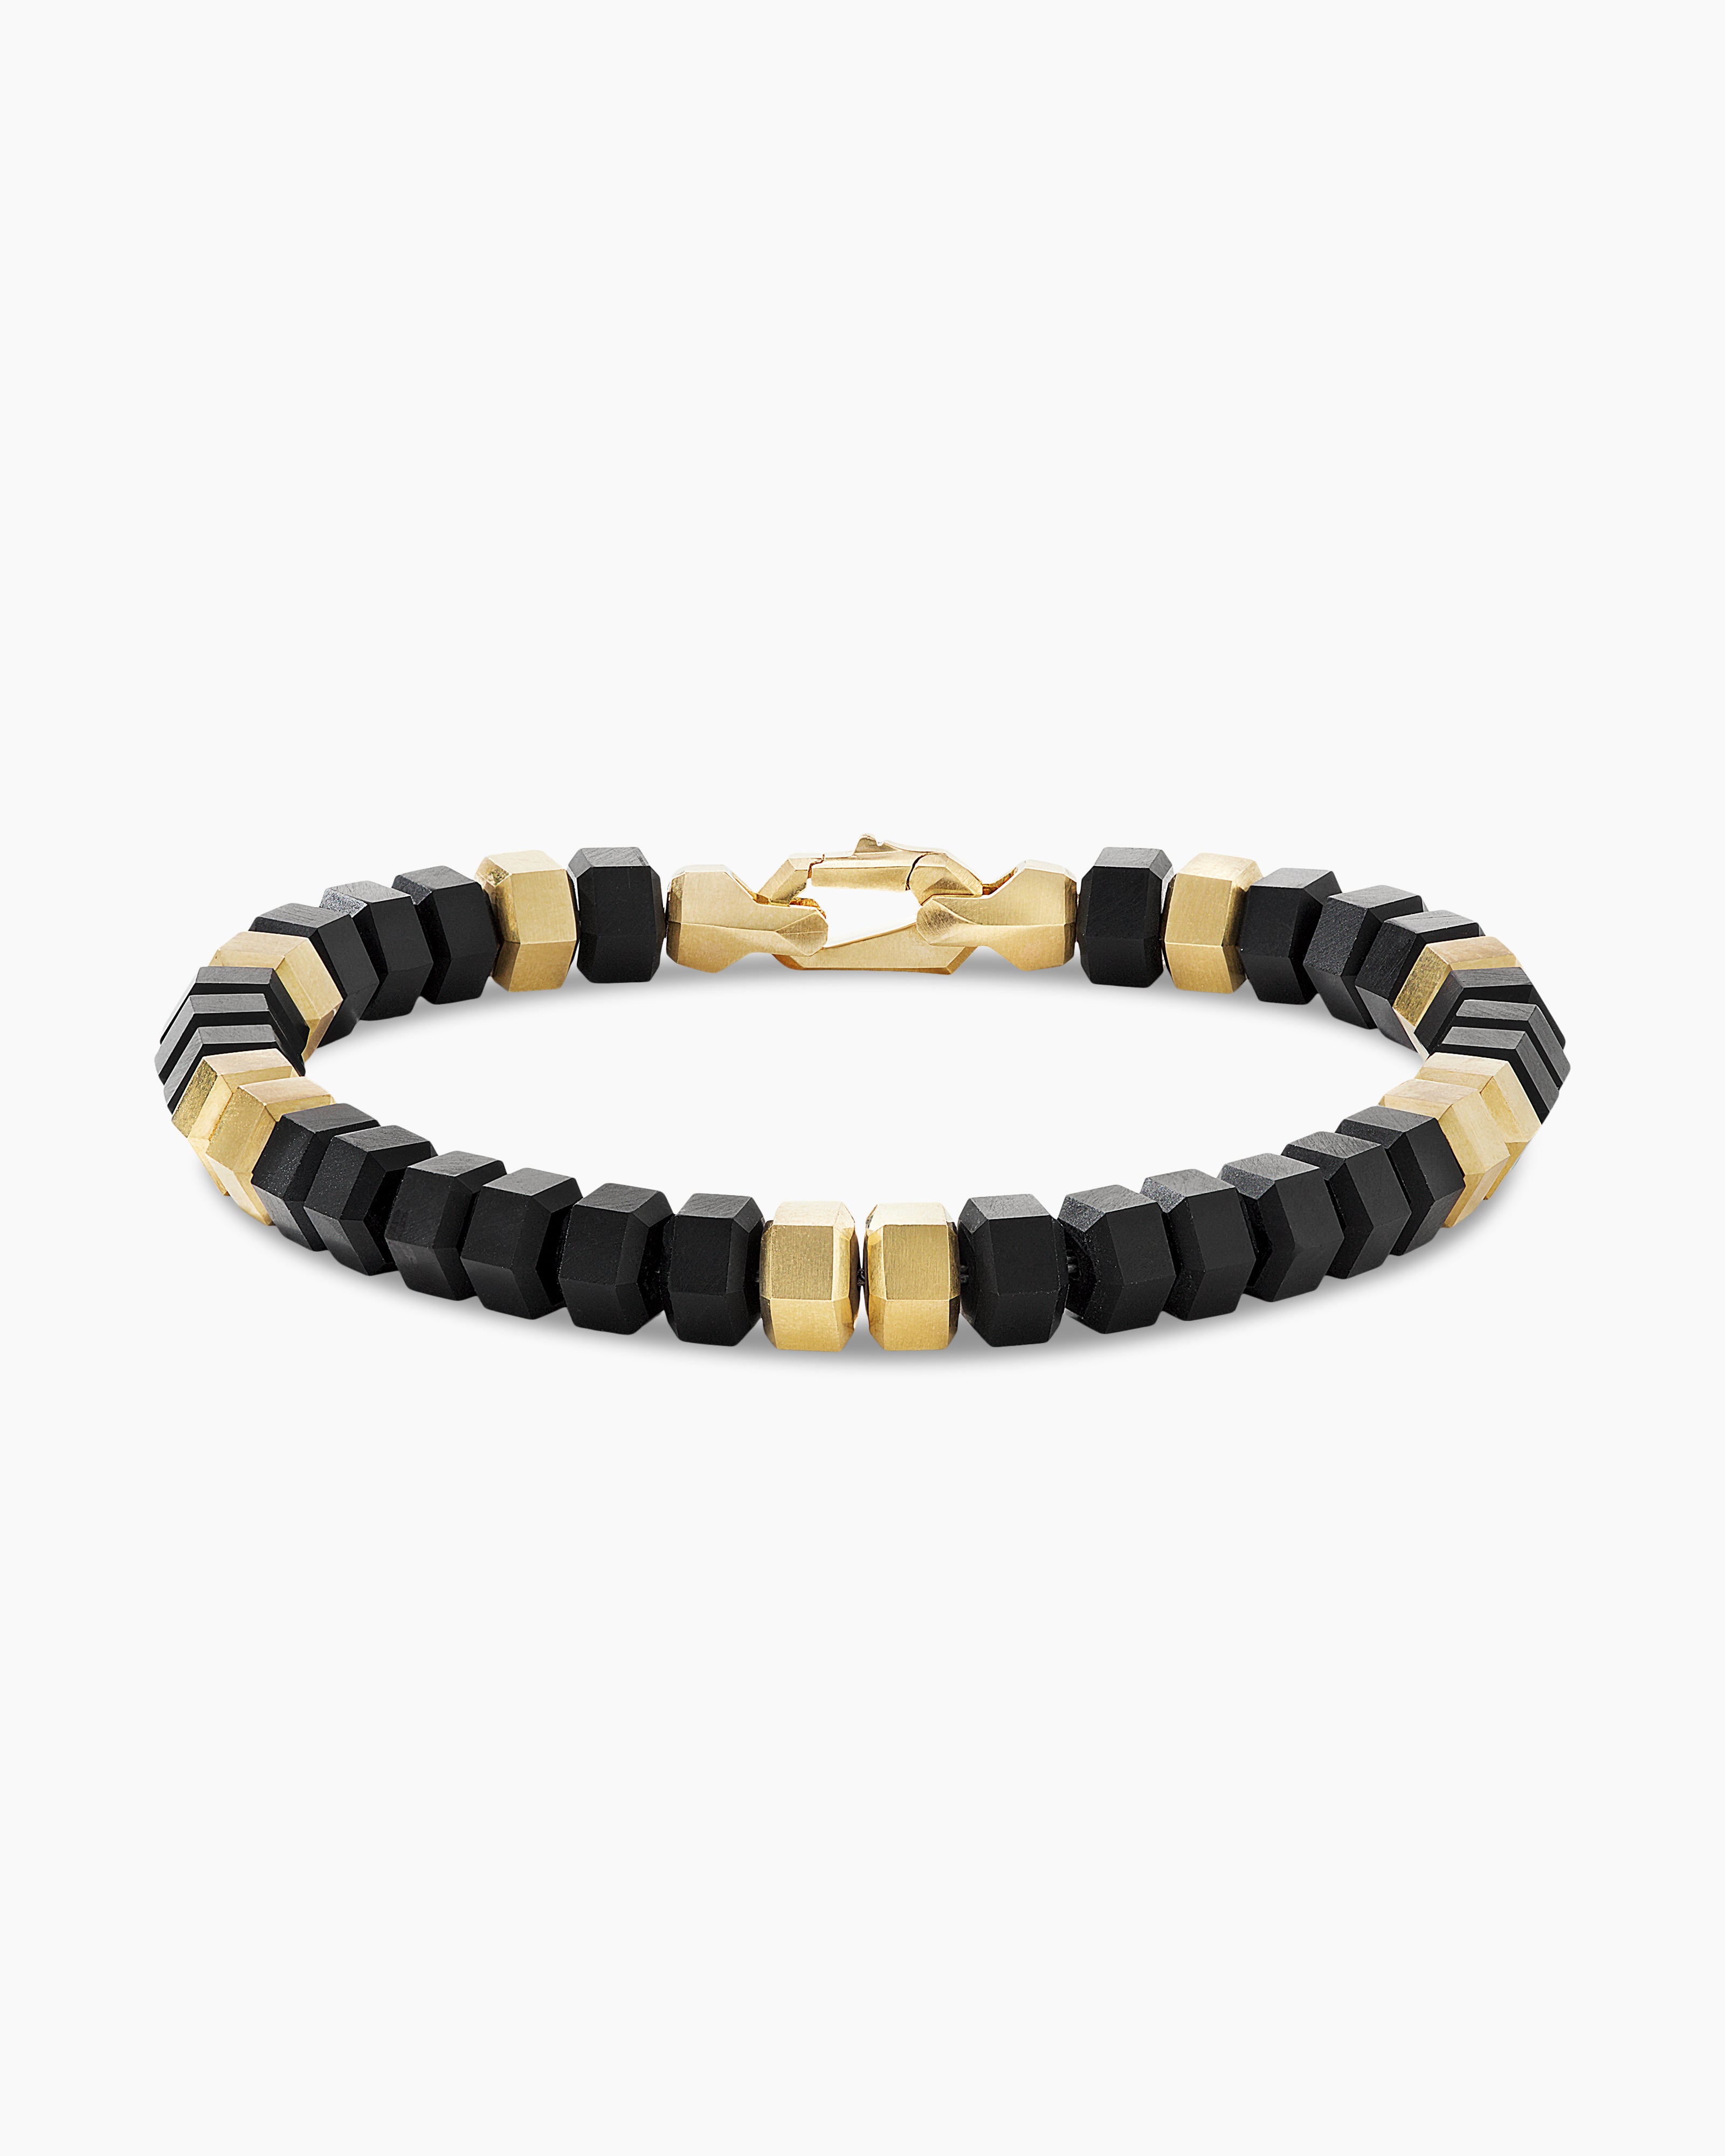 David Yurman Hex Bead Bracelet with Black Onyx and 18K Yellow Gold, 8mm Men's Size Medium